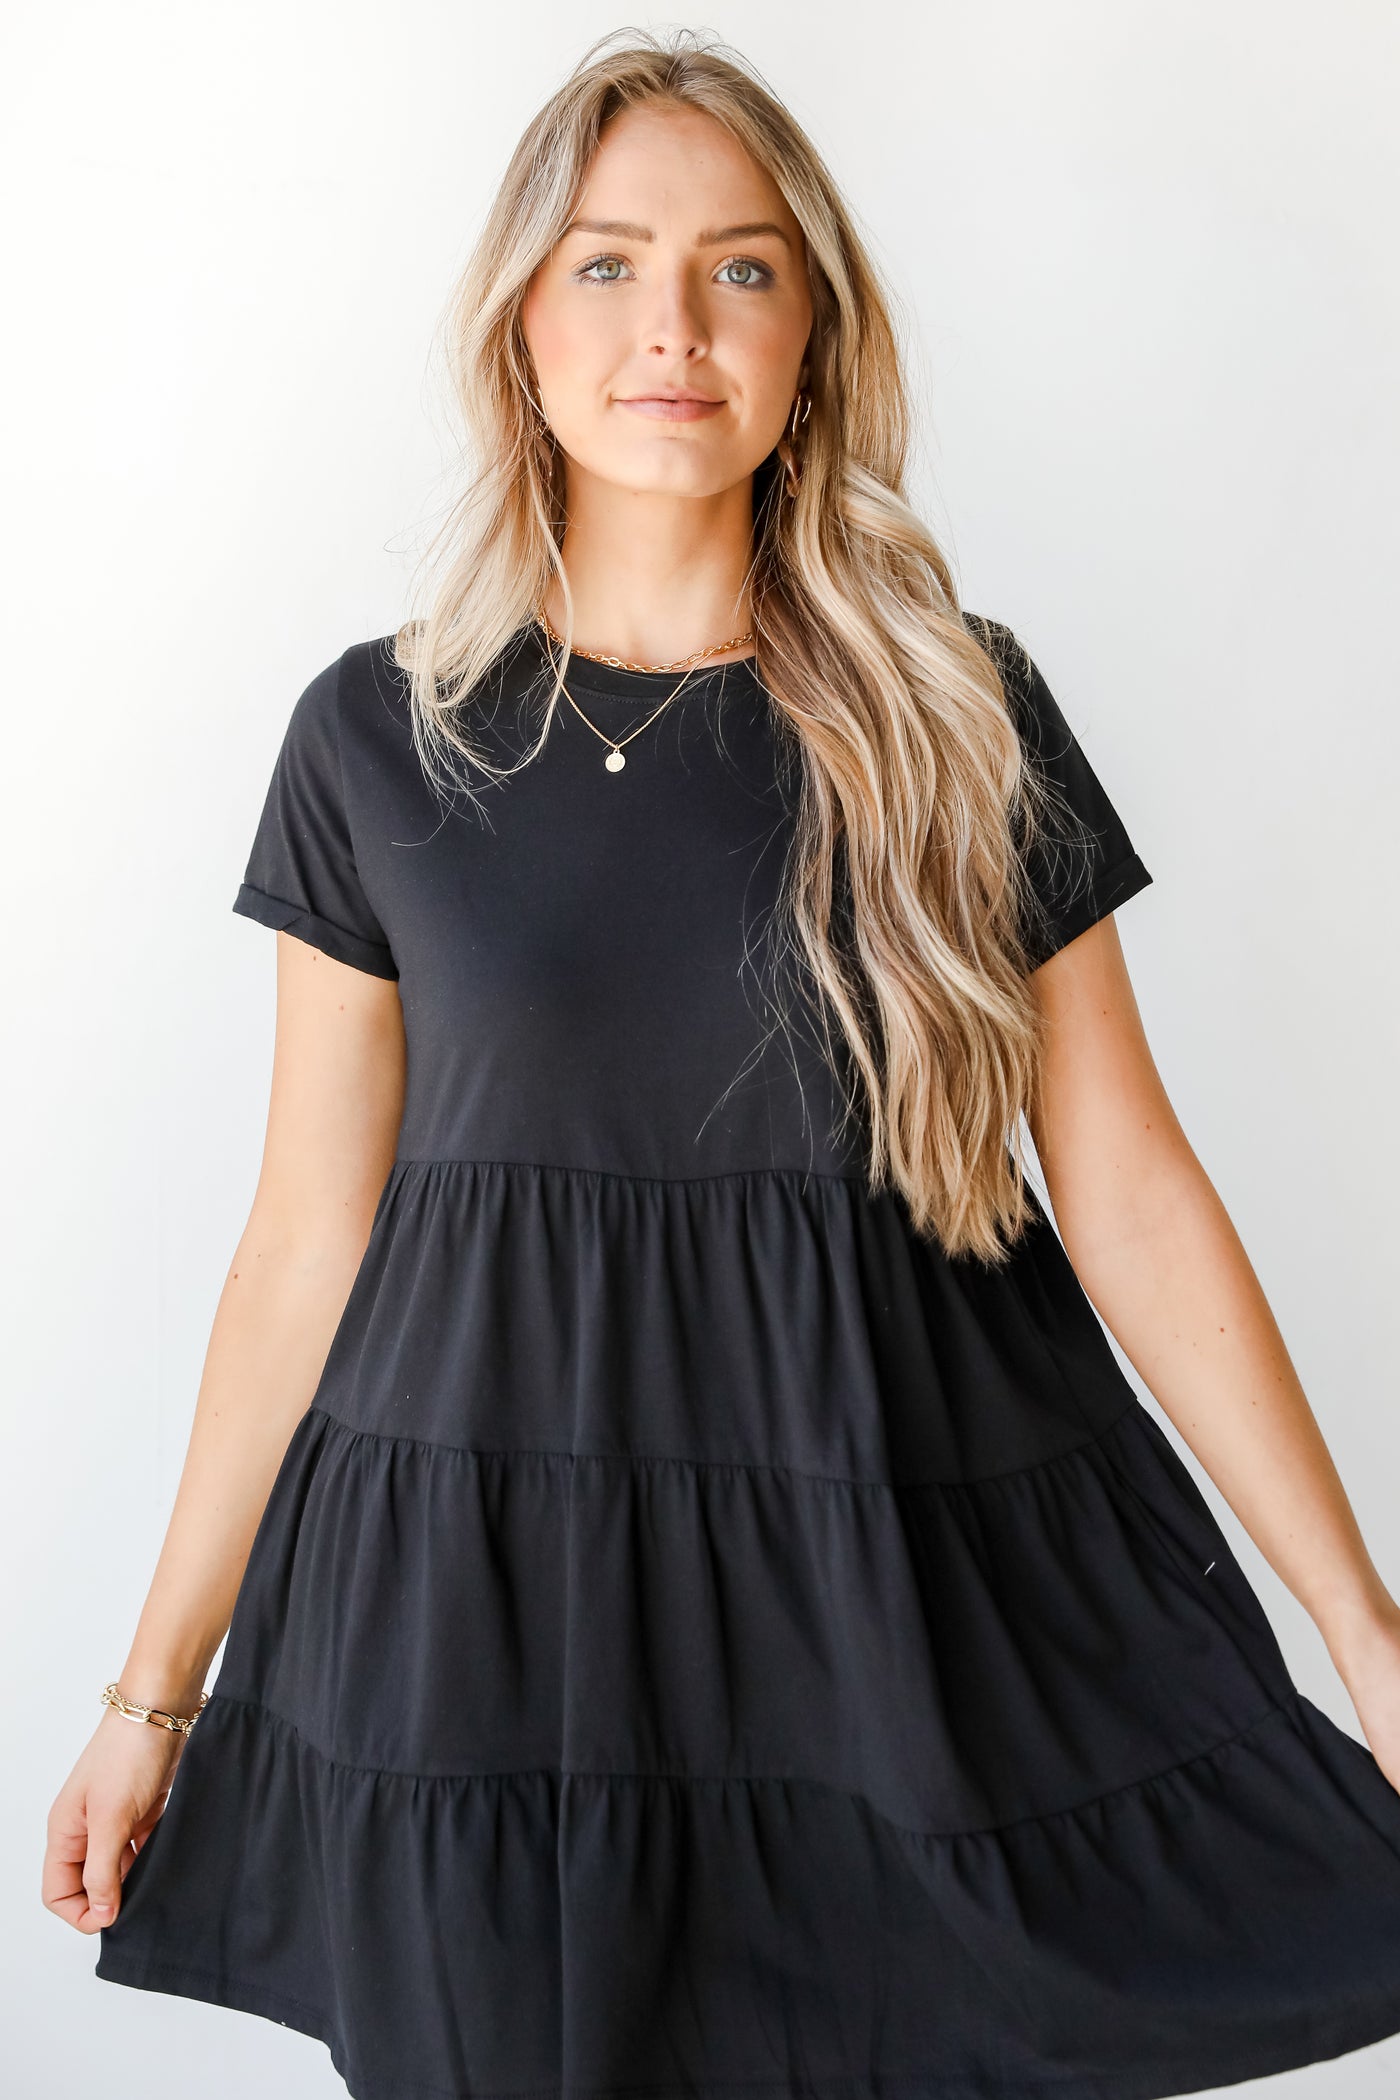 Tiered Mini Dress in black on model